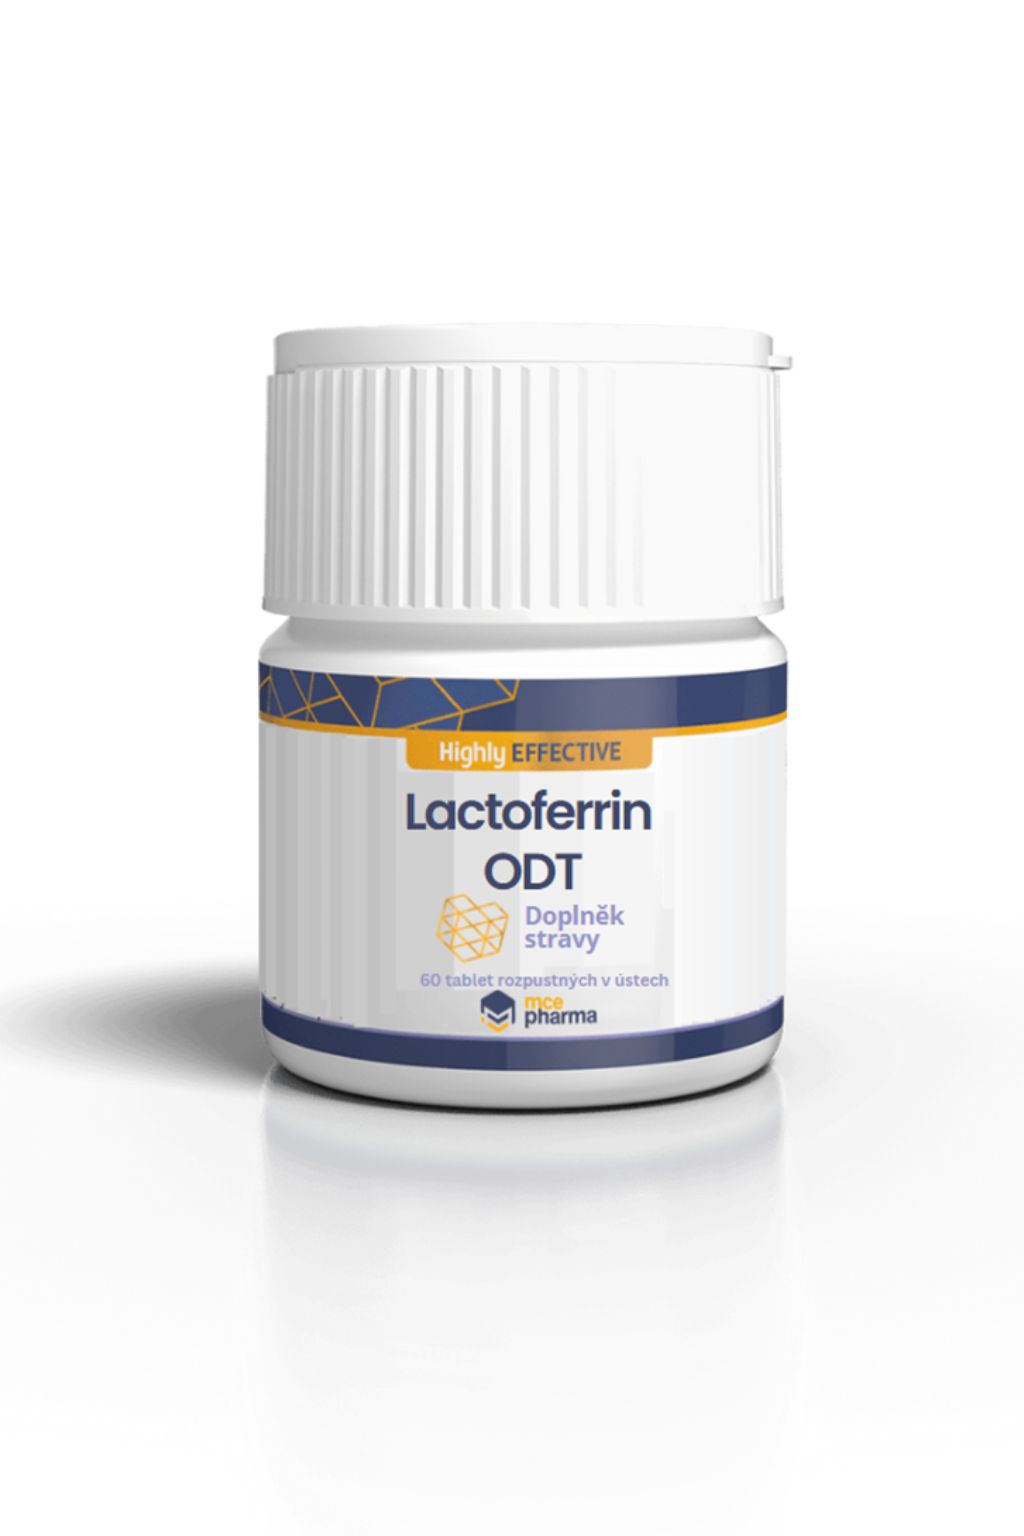 mcePharma Lactoferrin ODT Velikost balení: 60 tbl